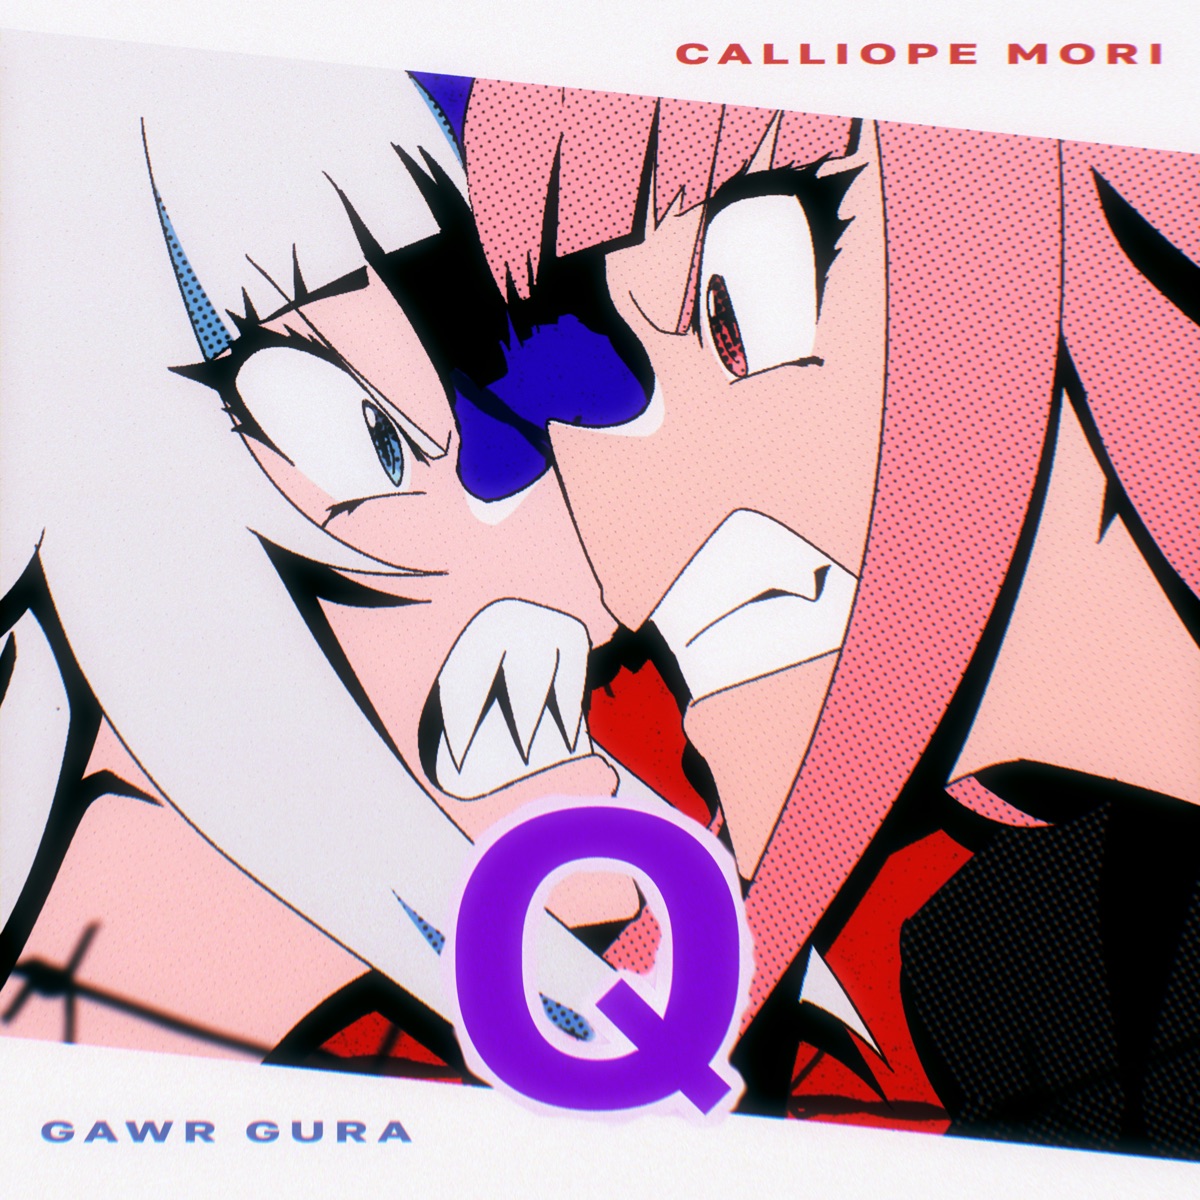 Cover art for『Mori Calliope x Gawr Gura - Q』from the release『Q』